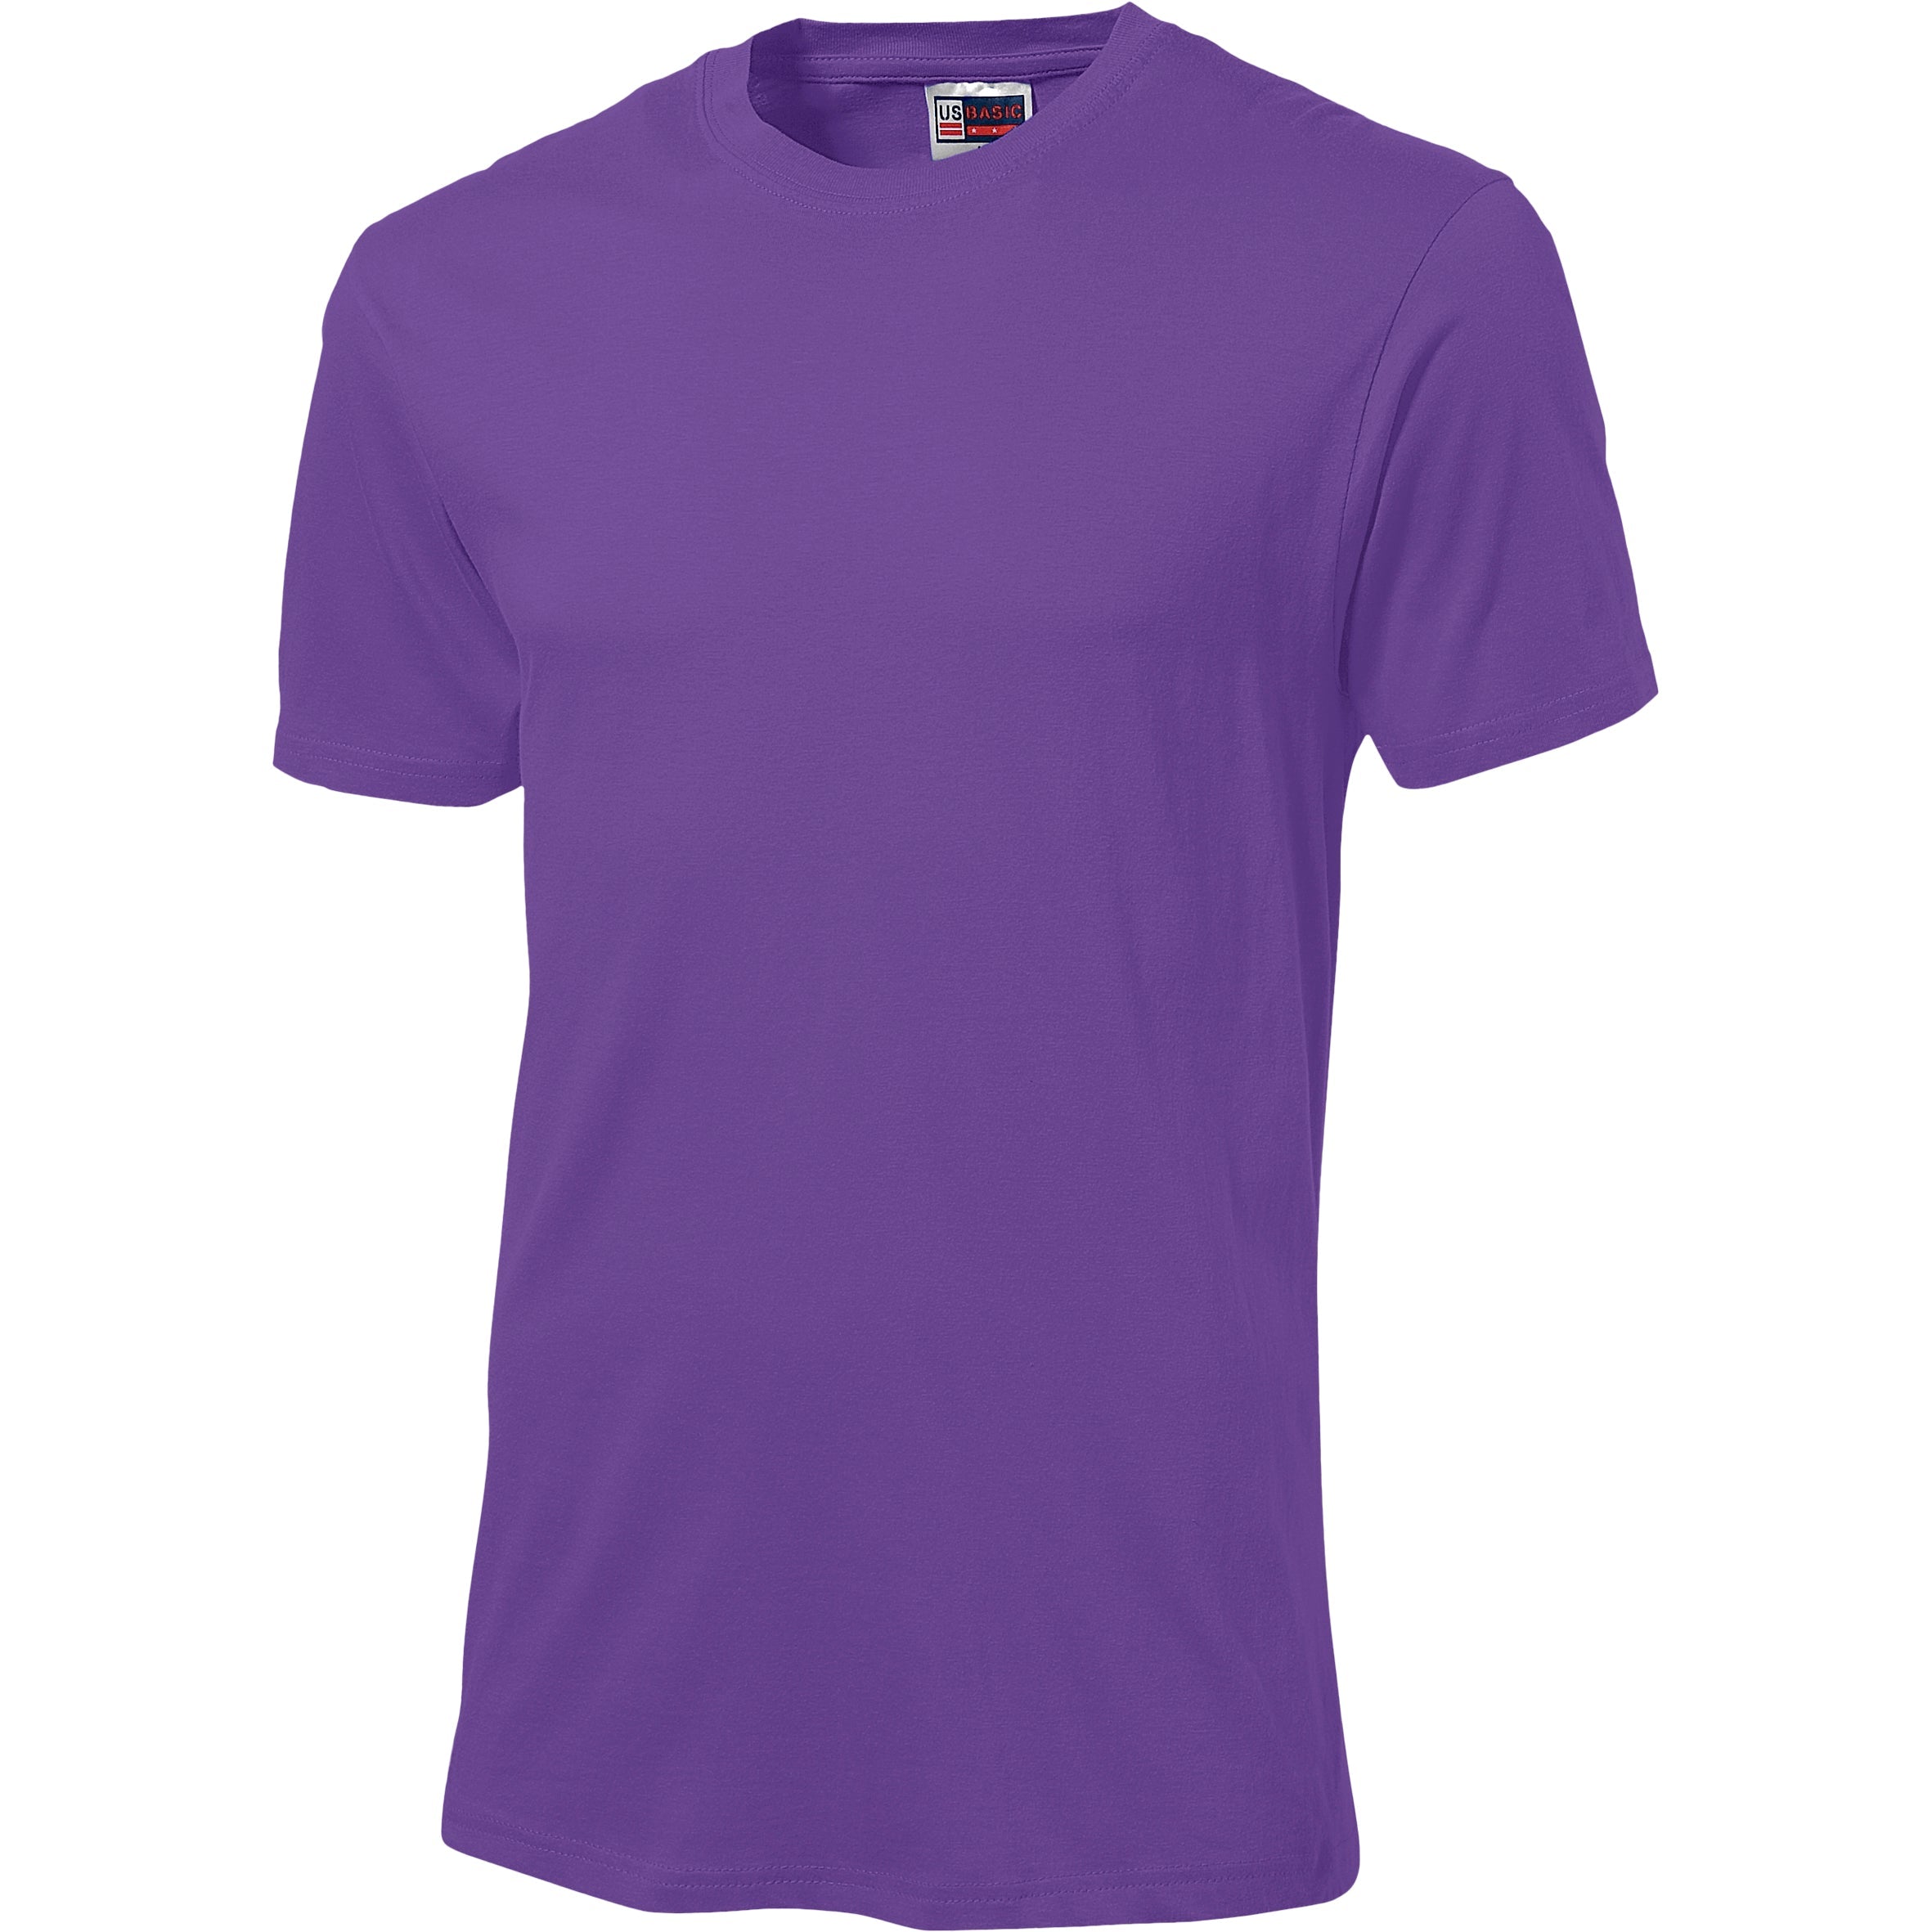 Unisex Super Club 135 T-Shirt L / Purple / P